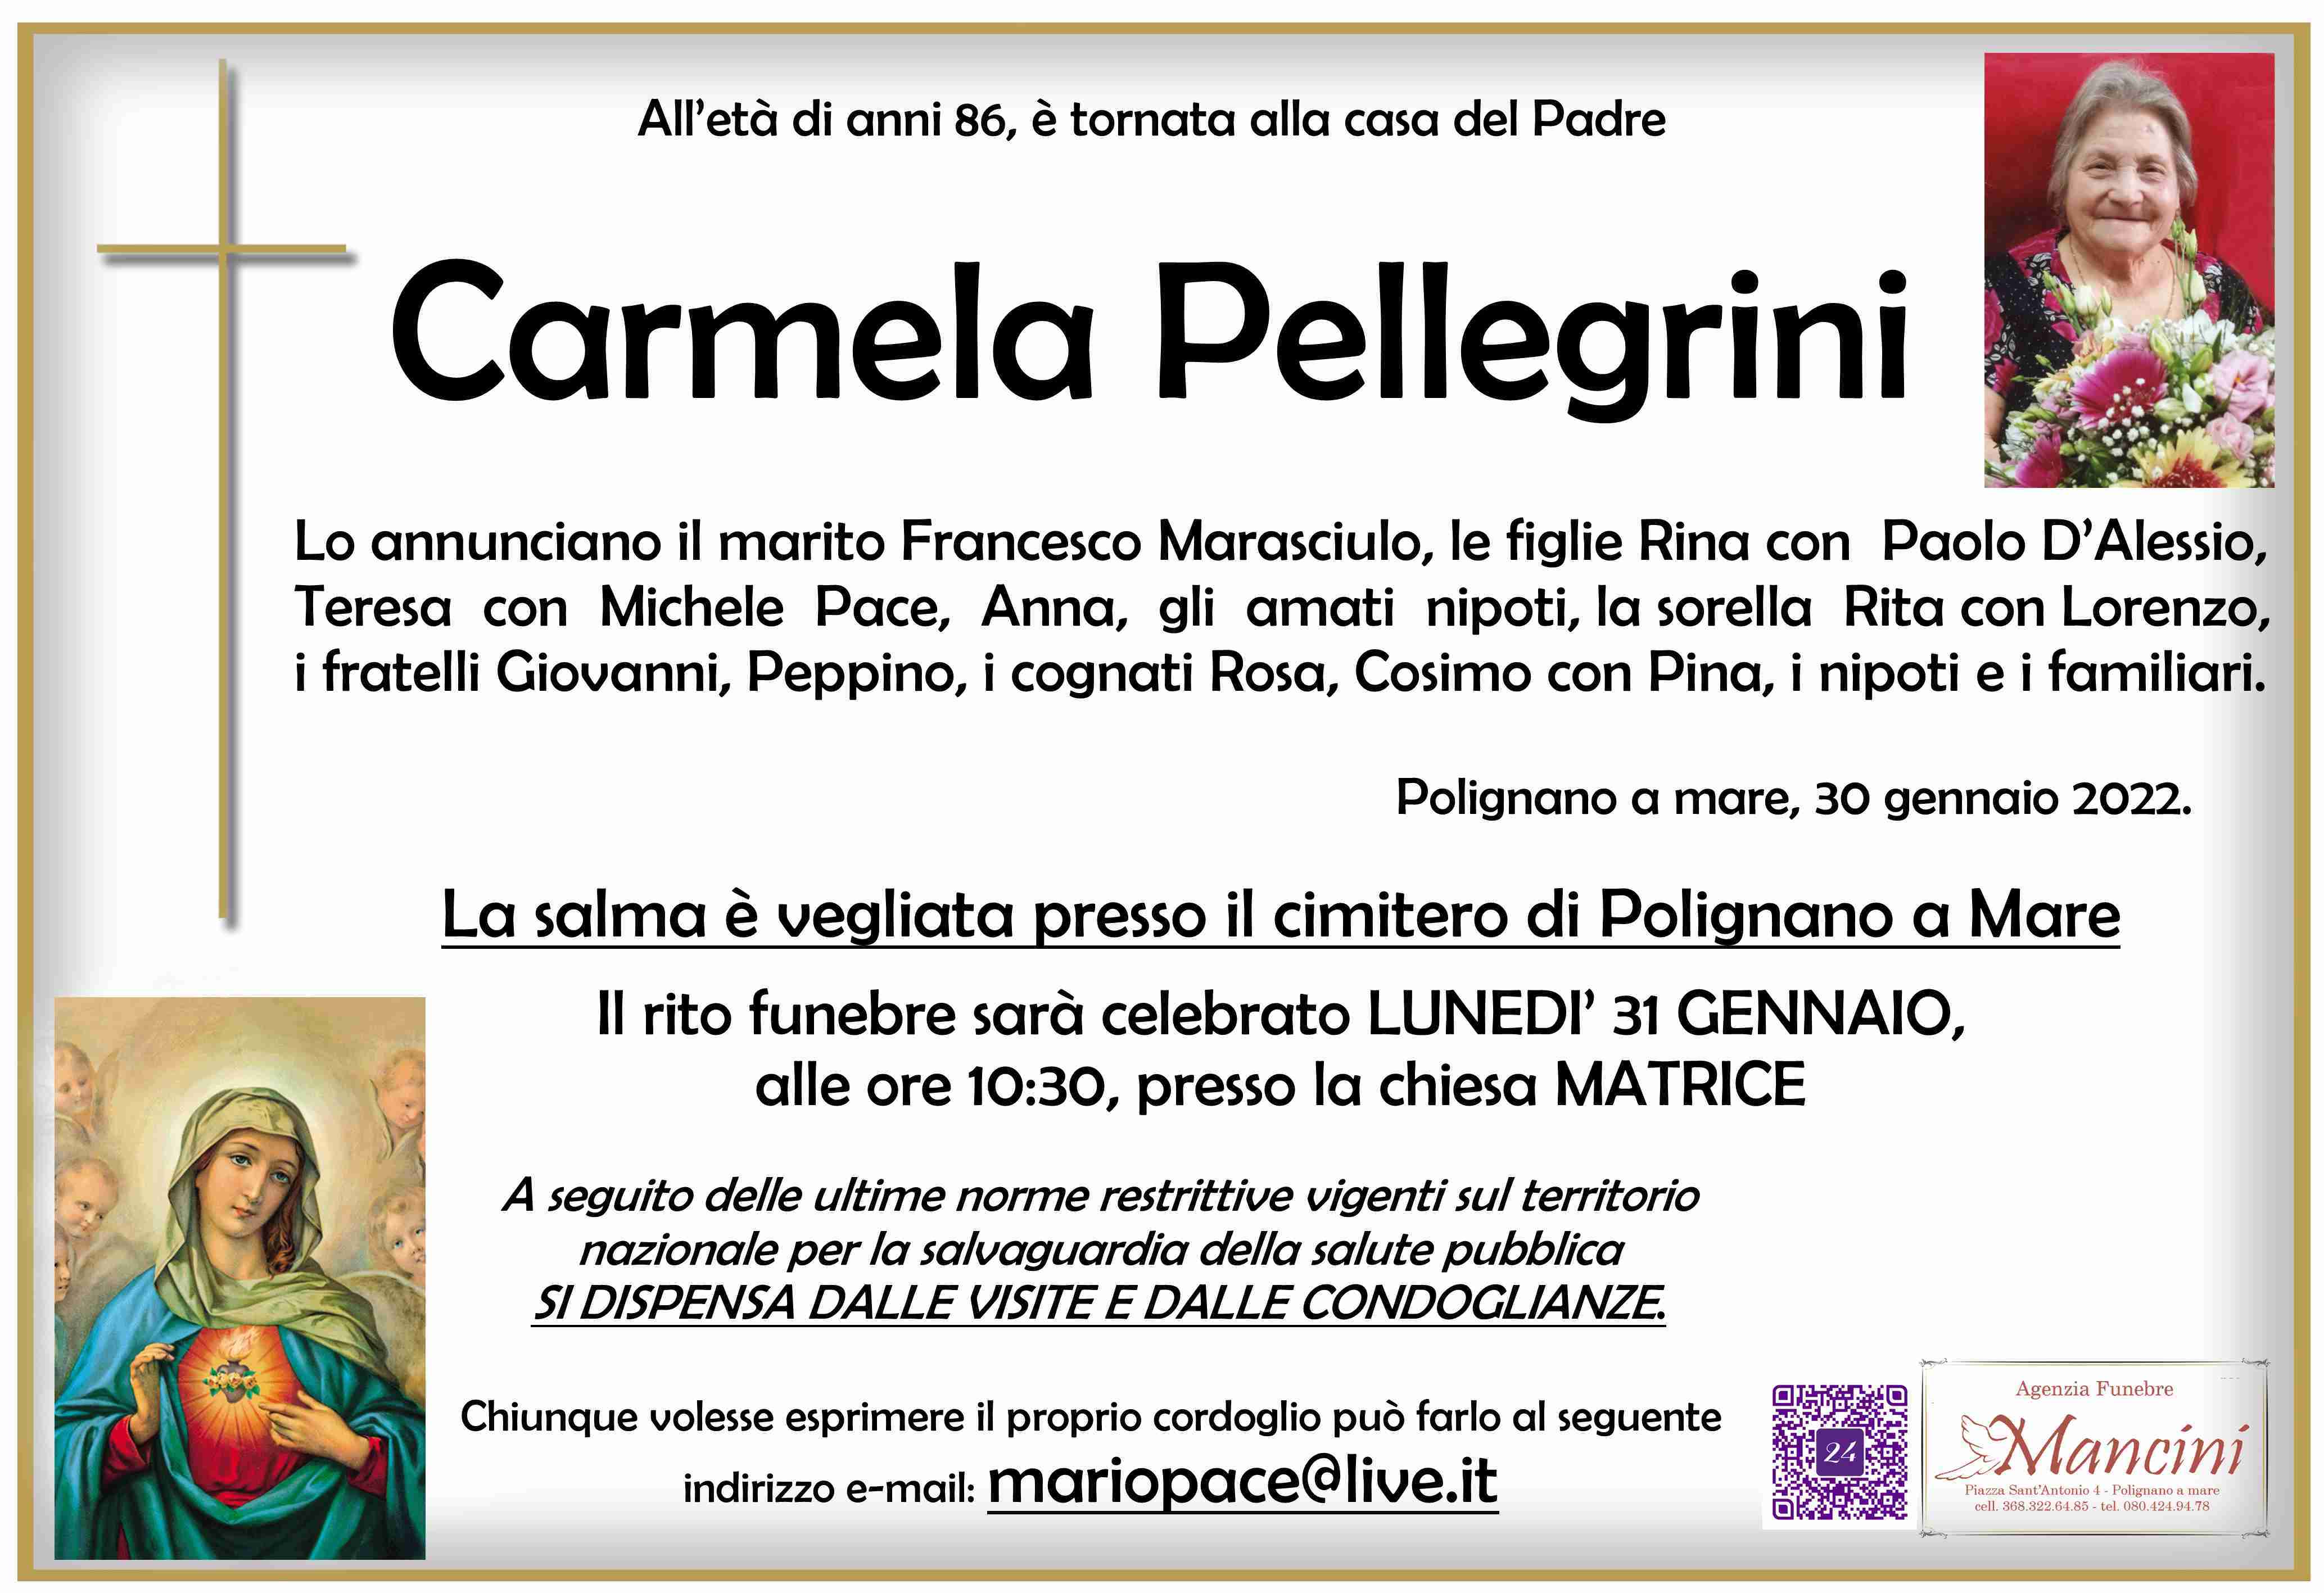 Carmela Pellegrini